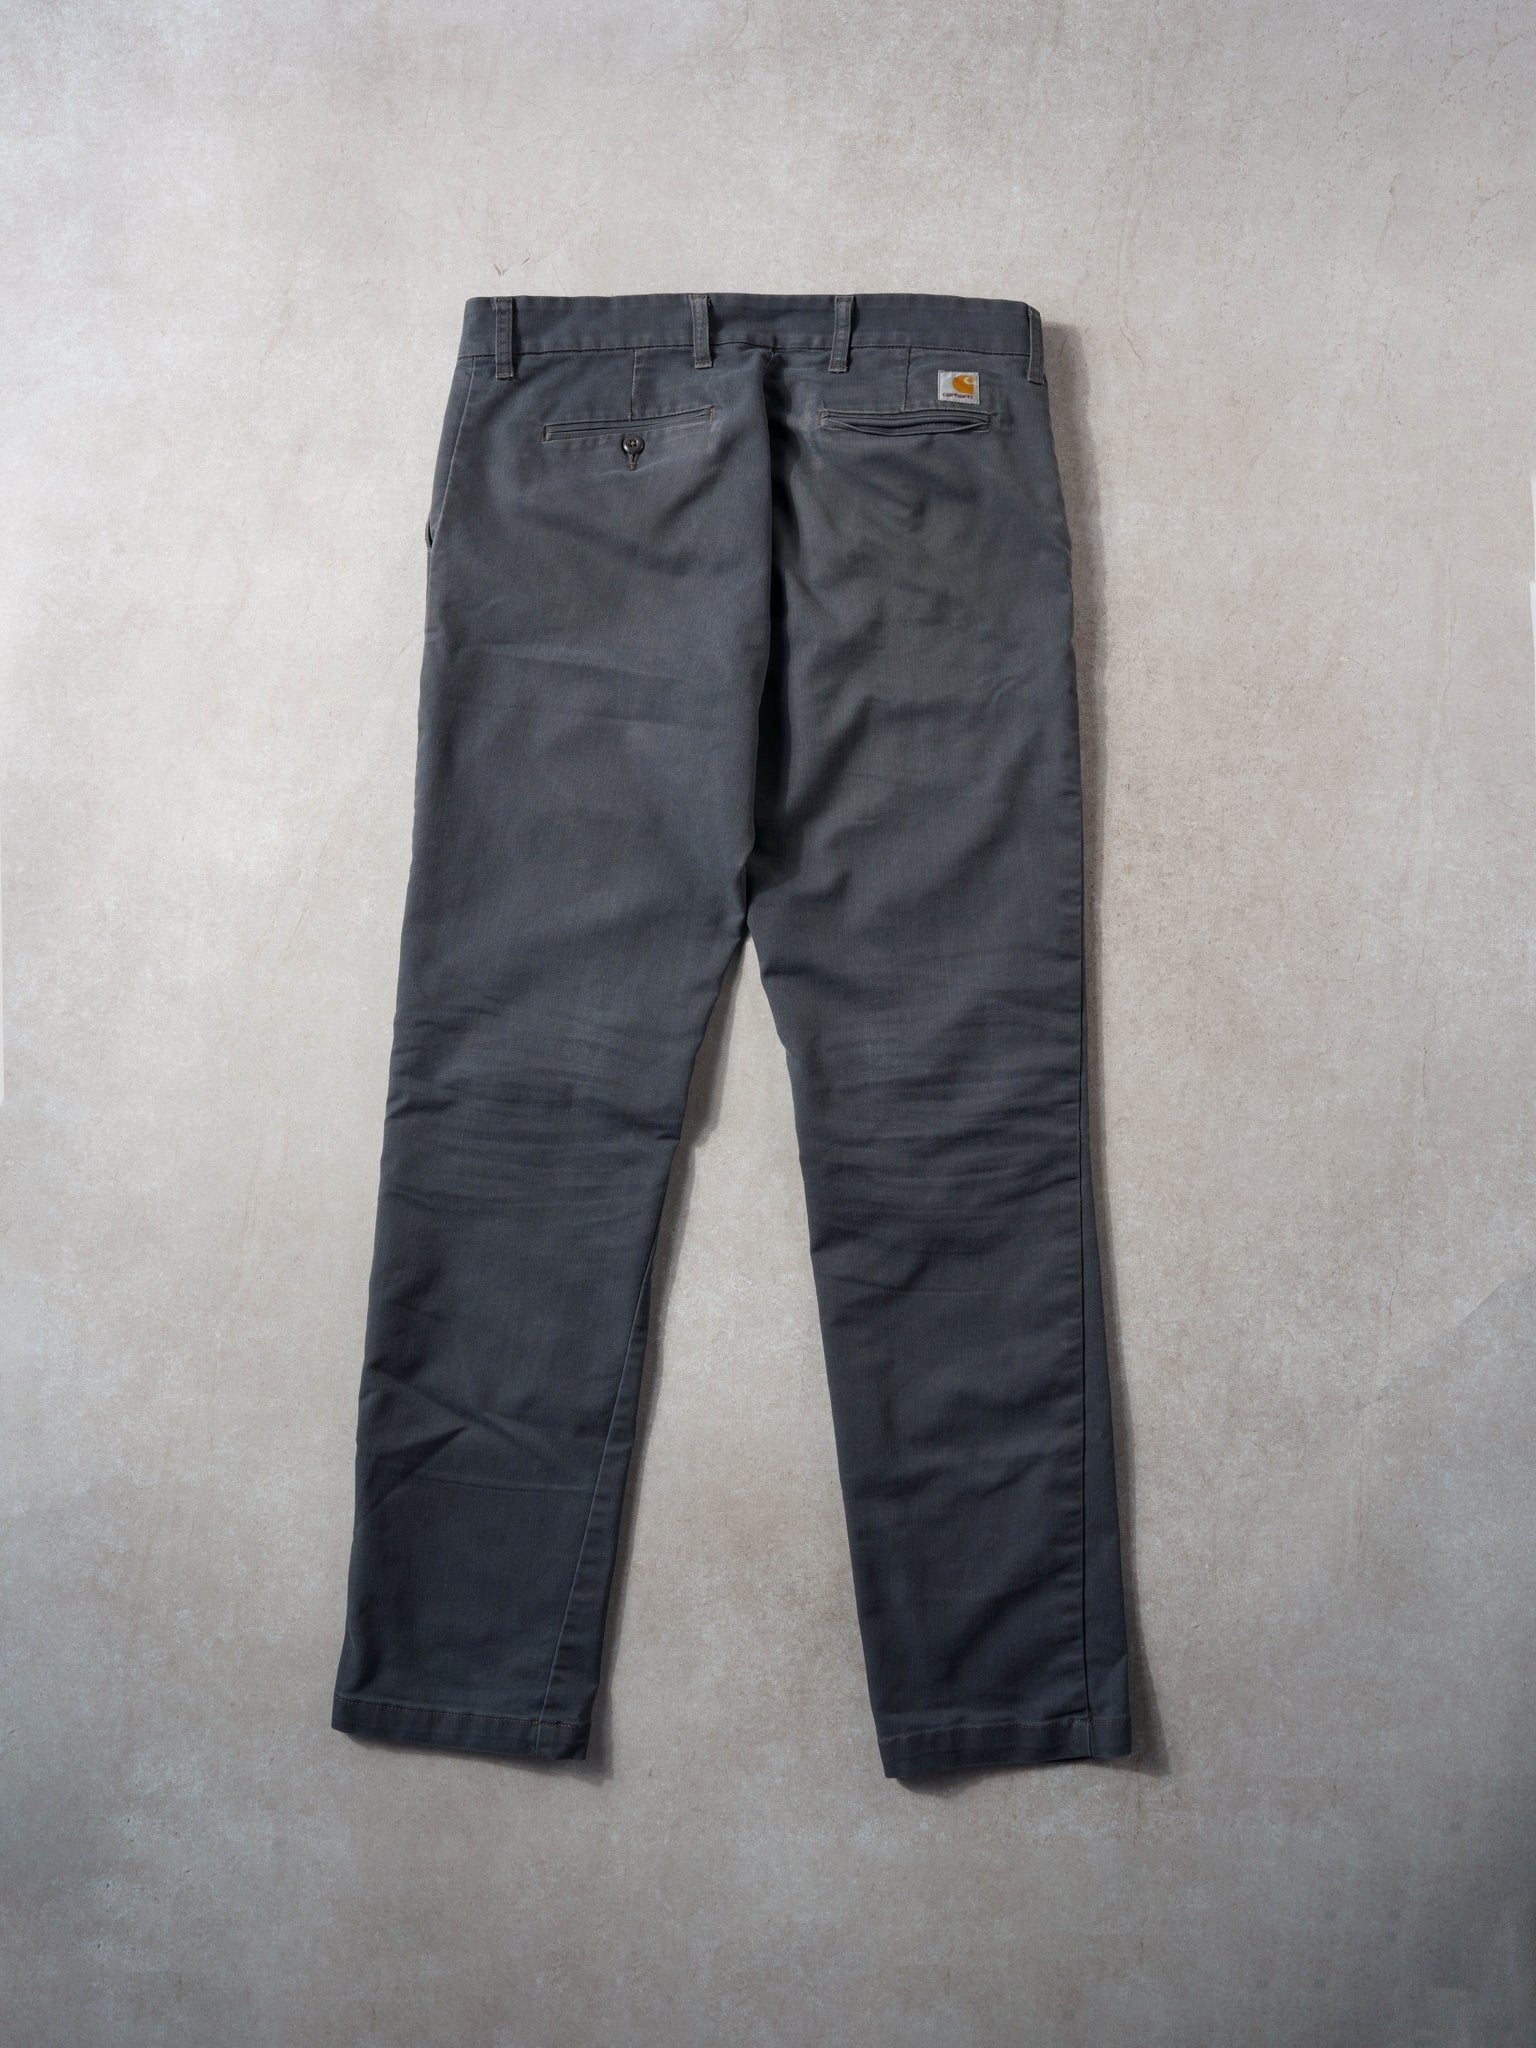 Vintage 90s Grey Carhartt Cid Straight Pants (36x31)